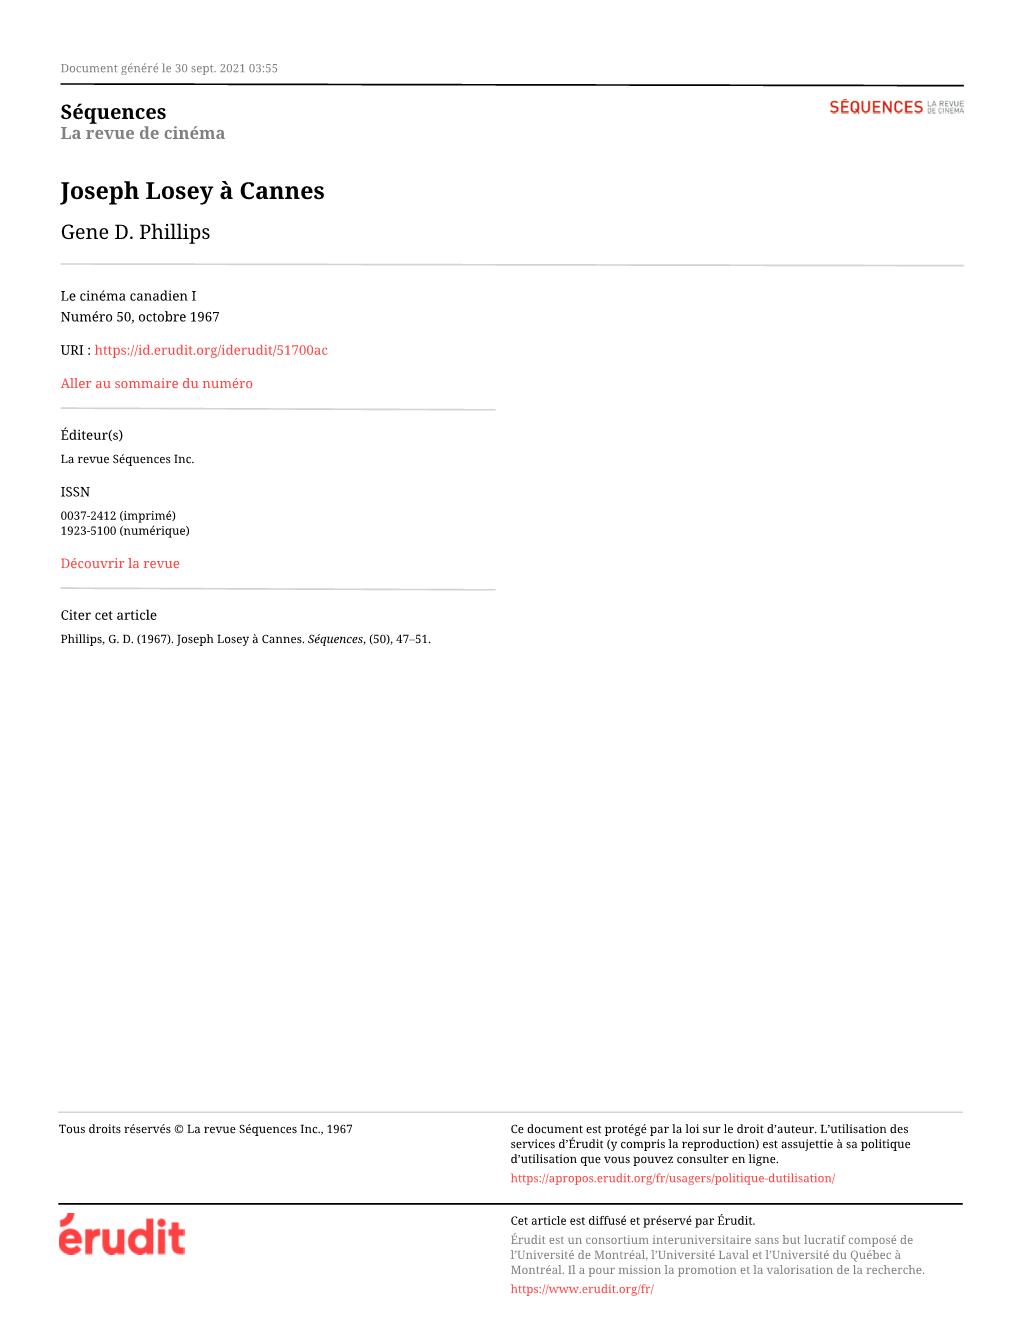 Joseph Losey À Cannes Gene D